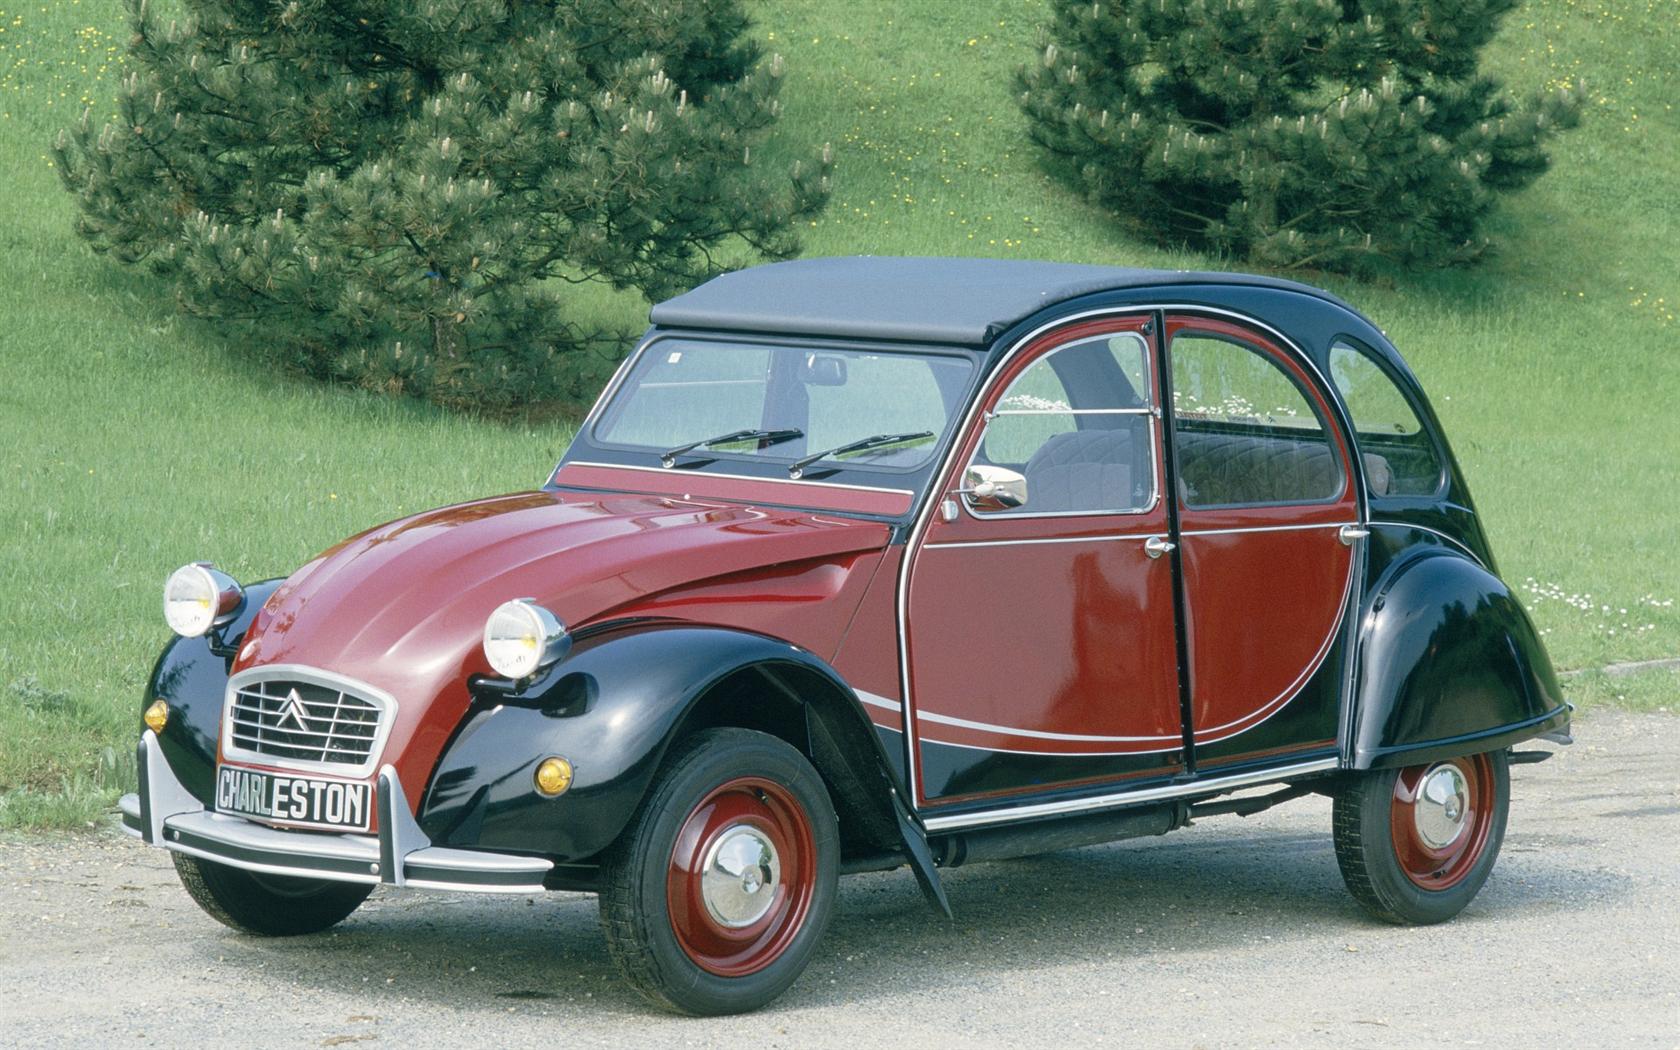 Citroën 2CV "Charleston" (1980's)